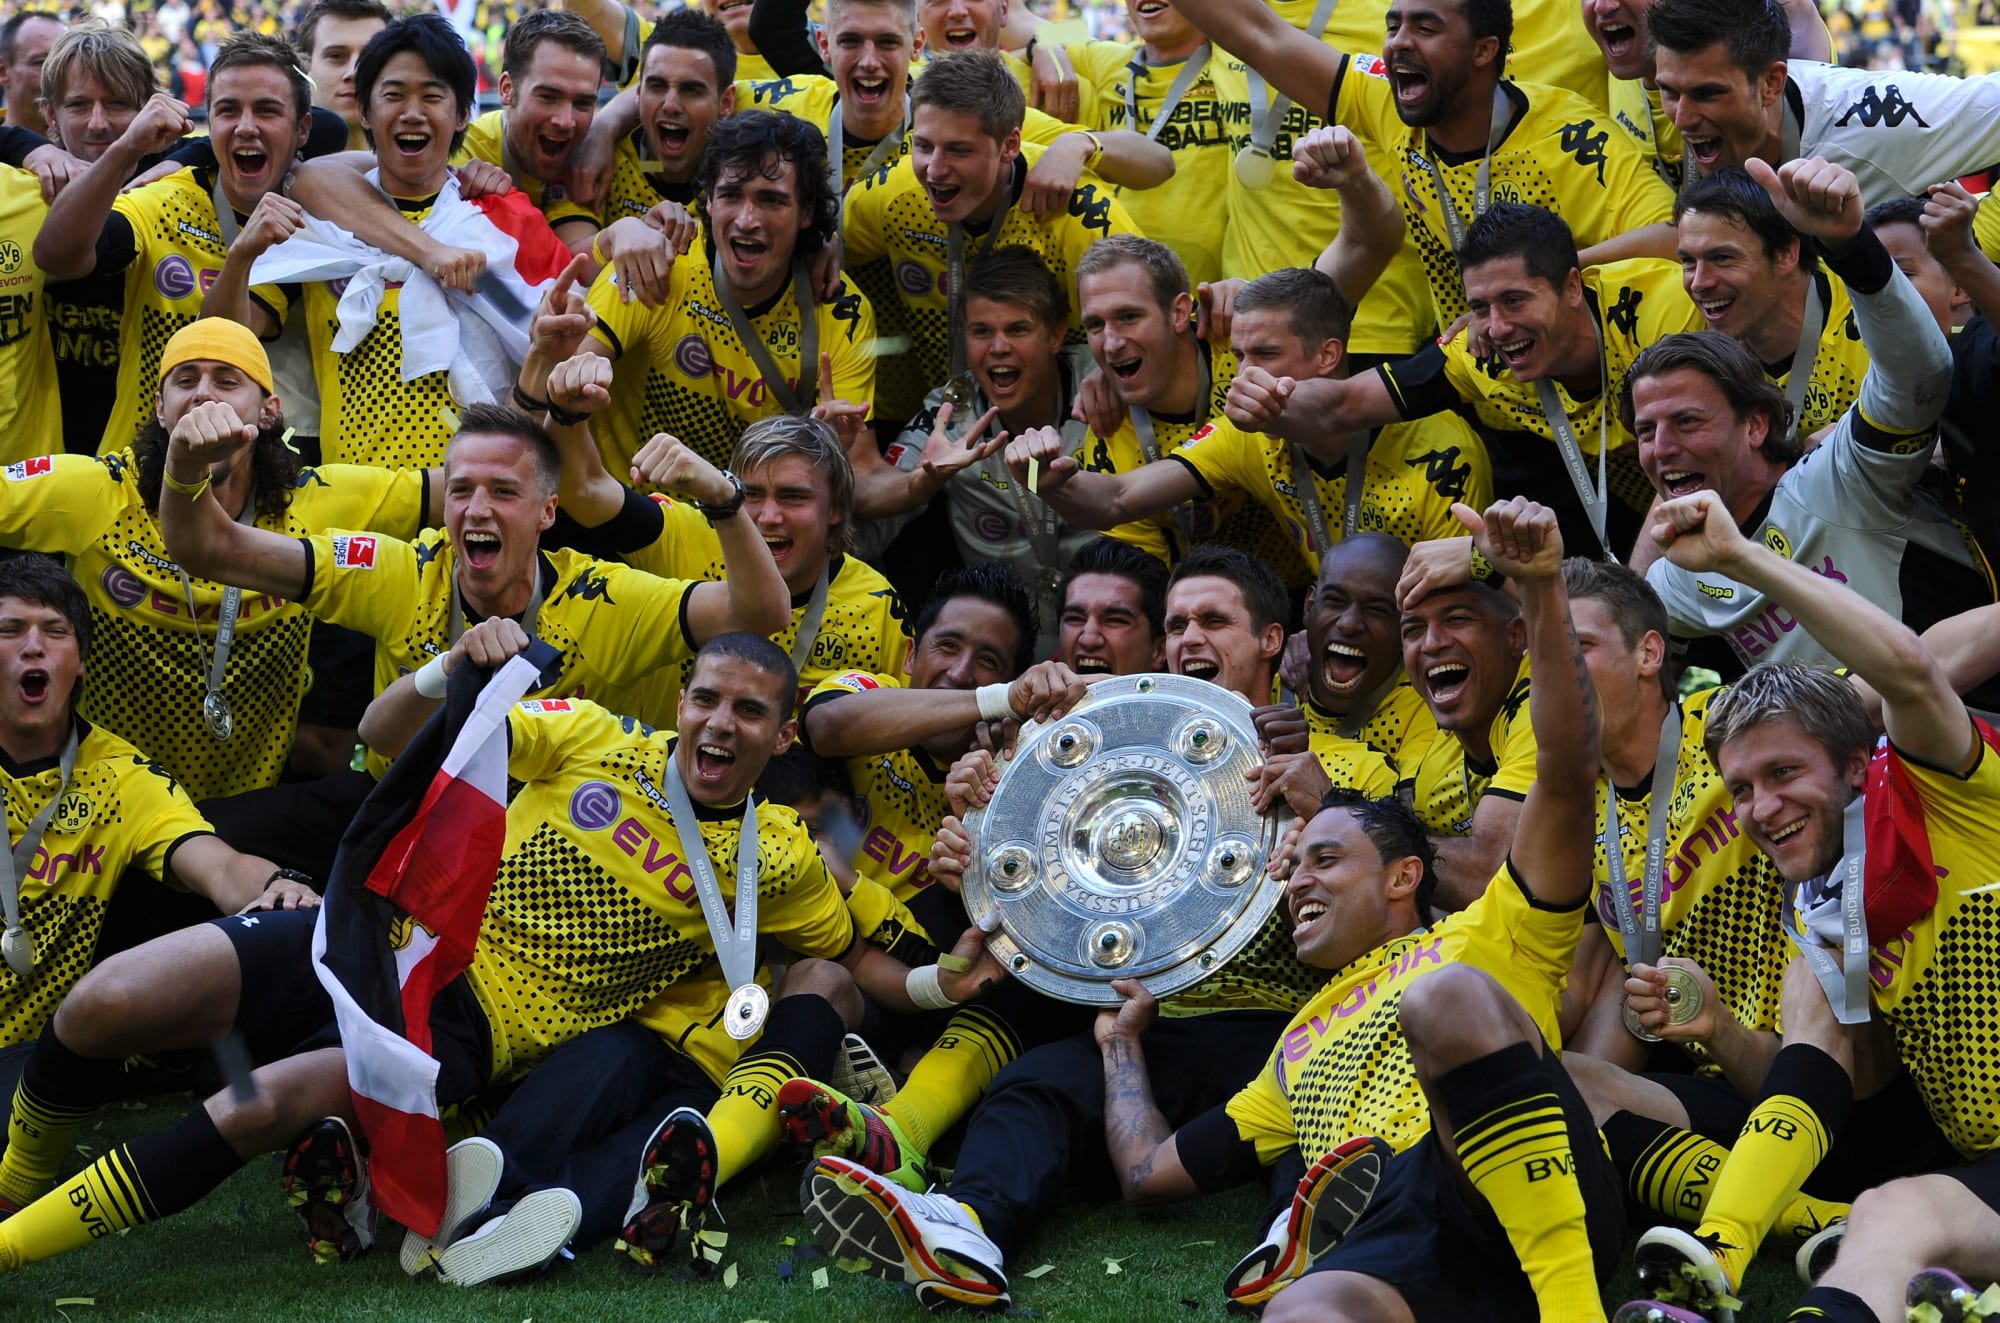 Borussia Dortmund Team